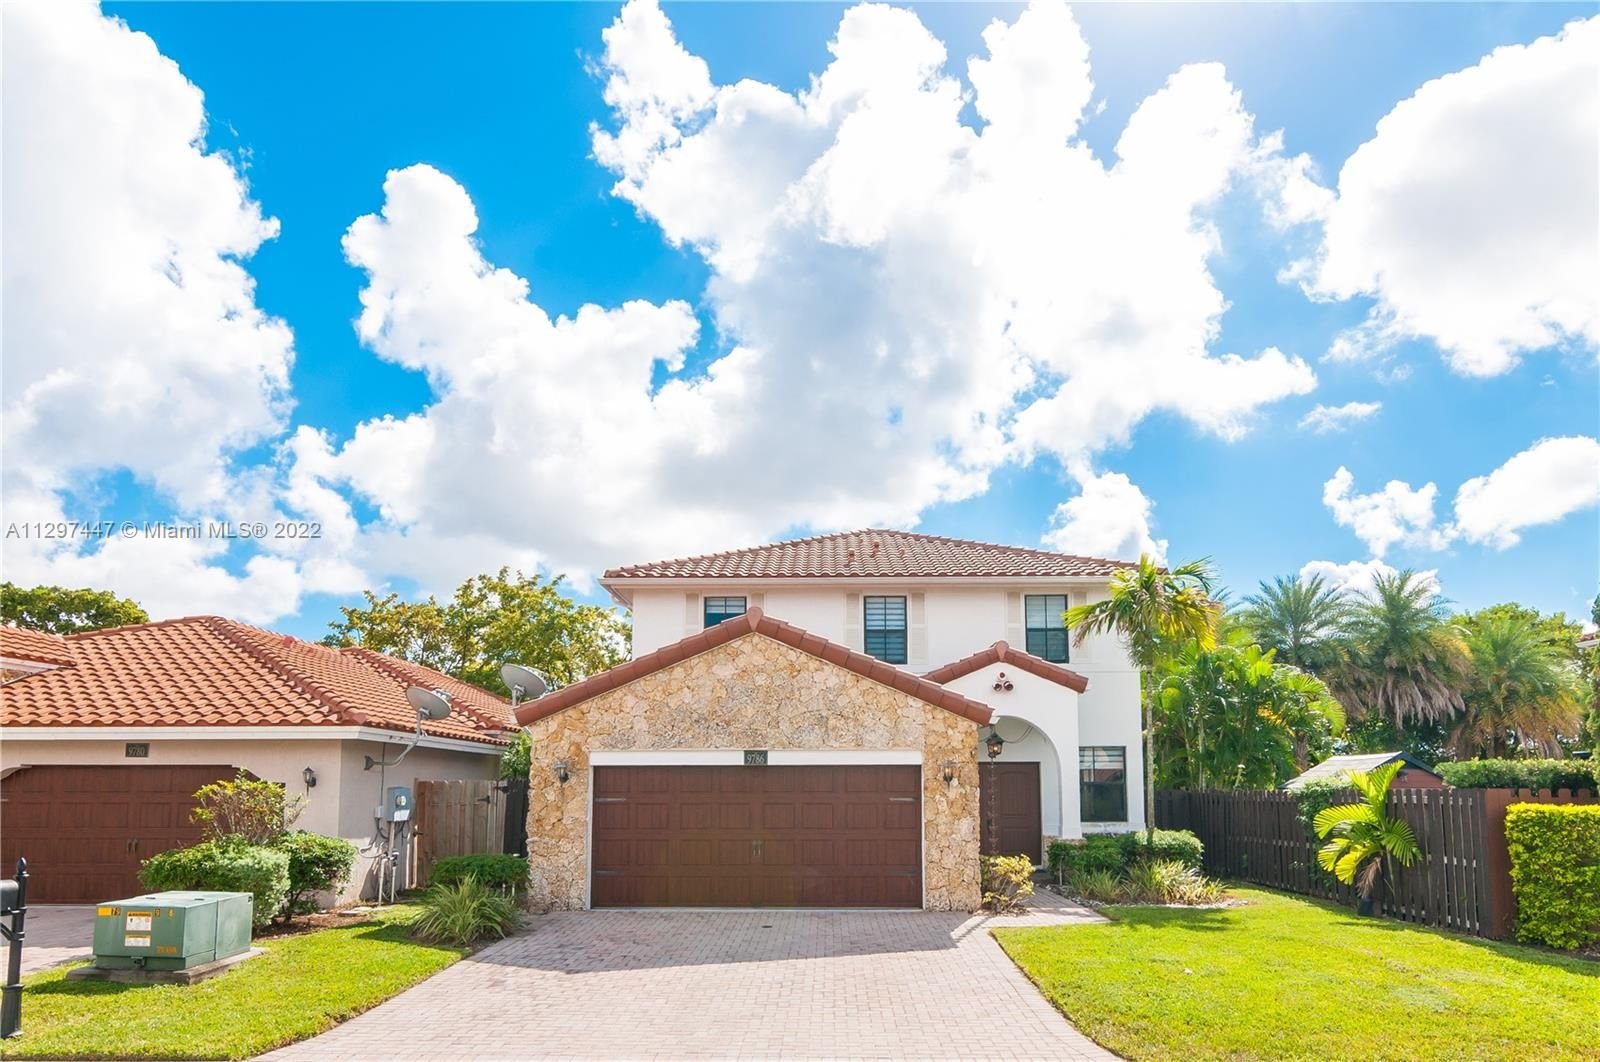 Real estate property located at 9786 8th Ter, Miami-Dade County, Miami, FL